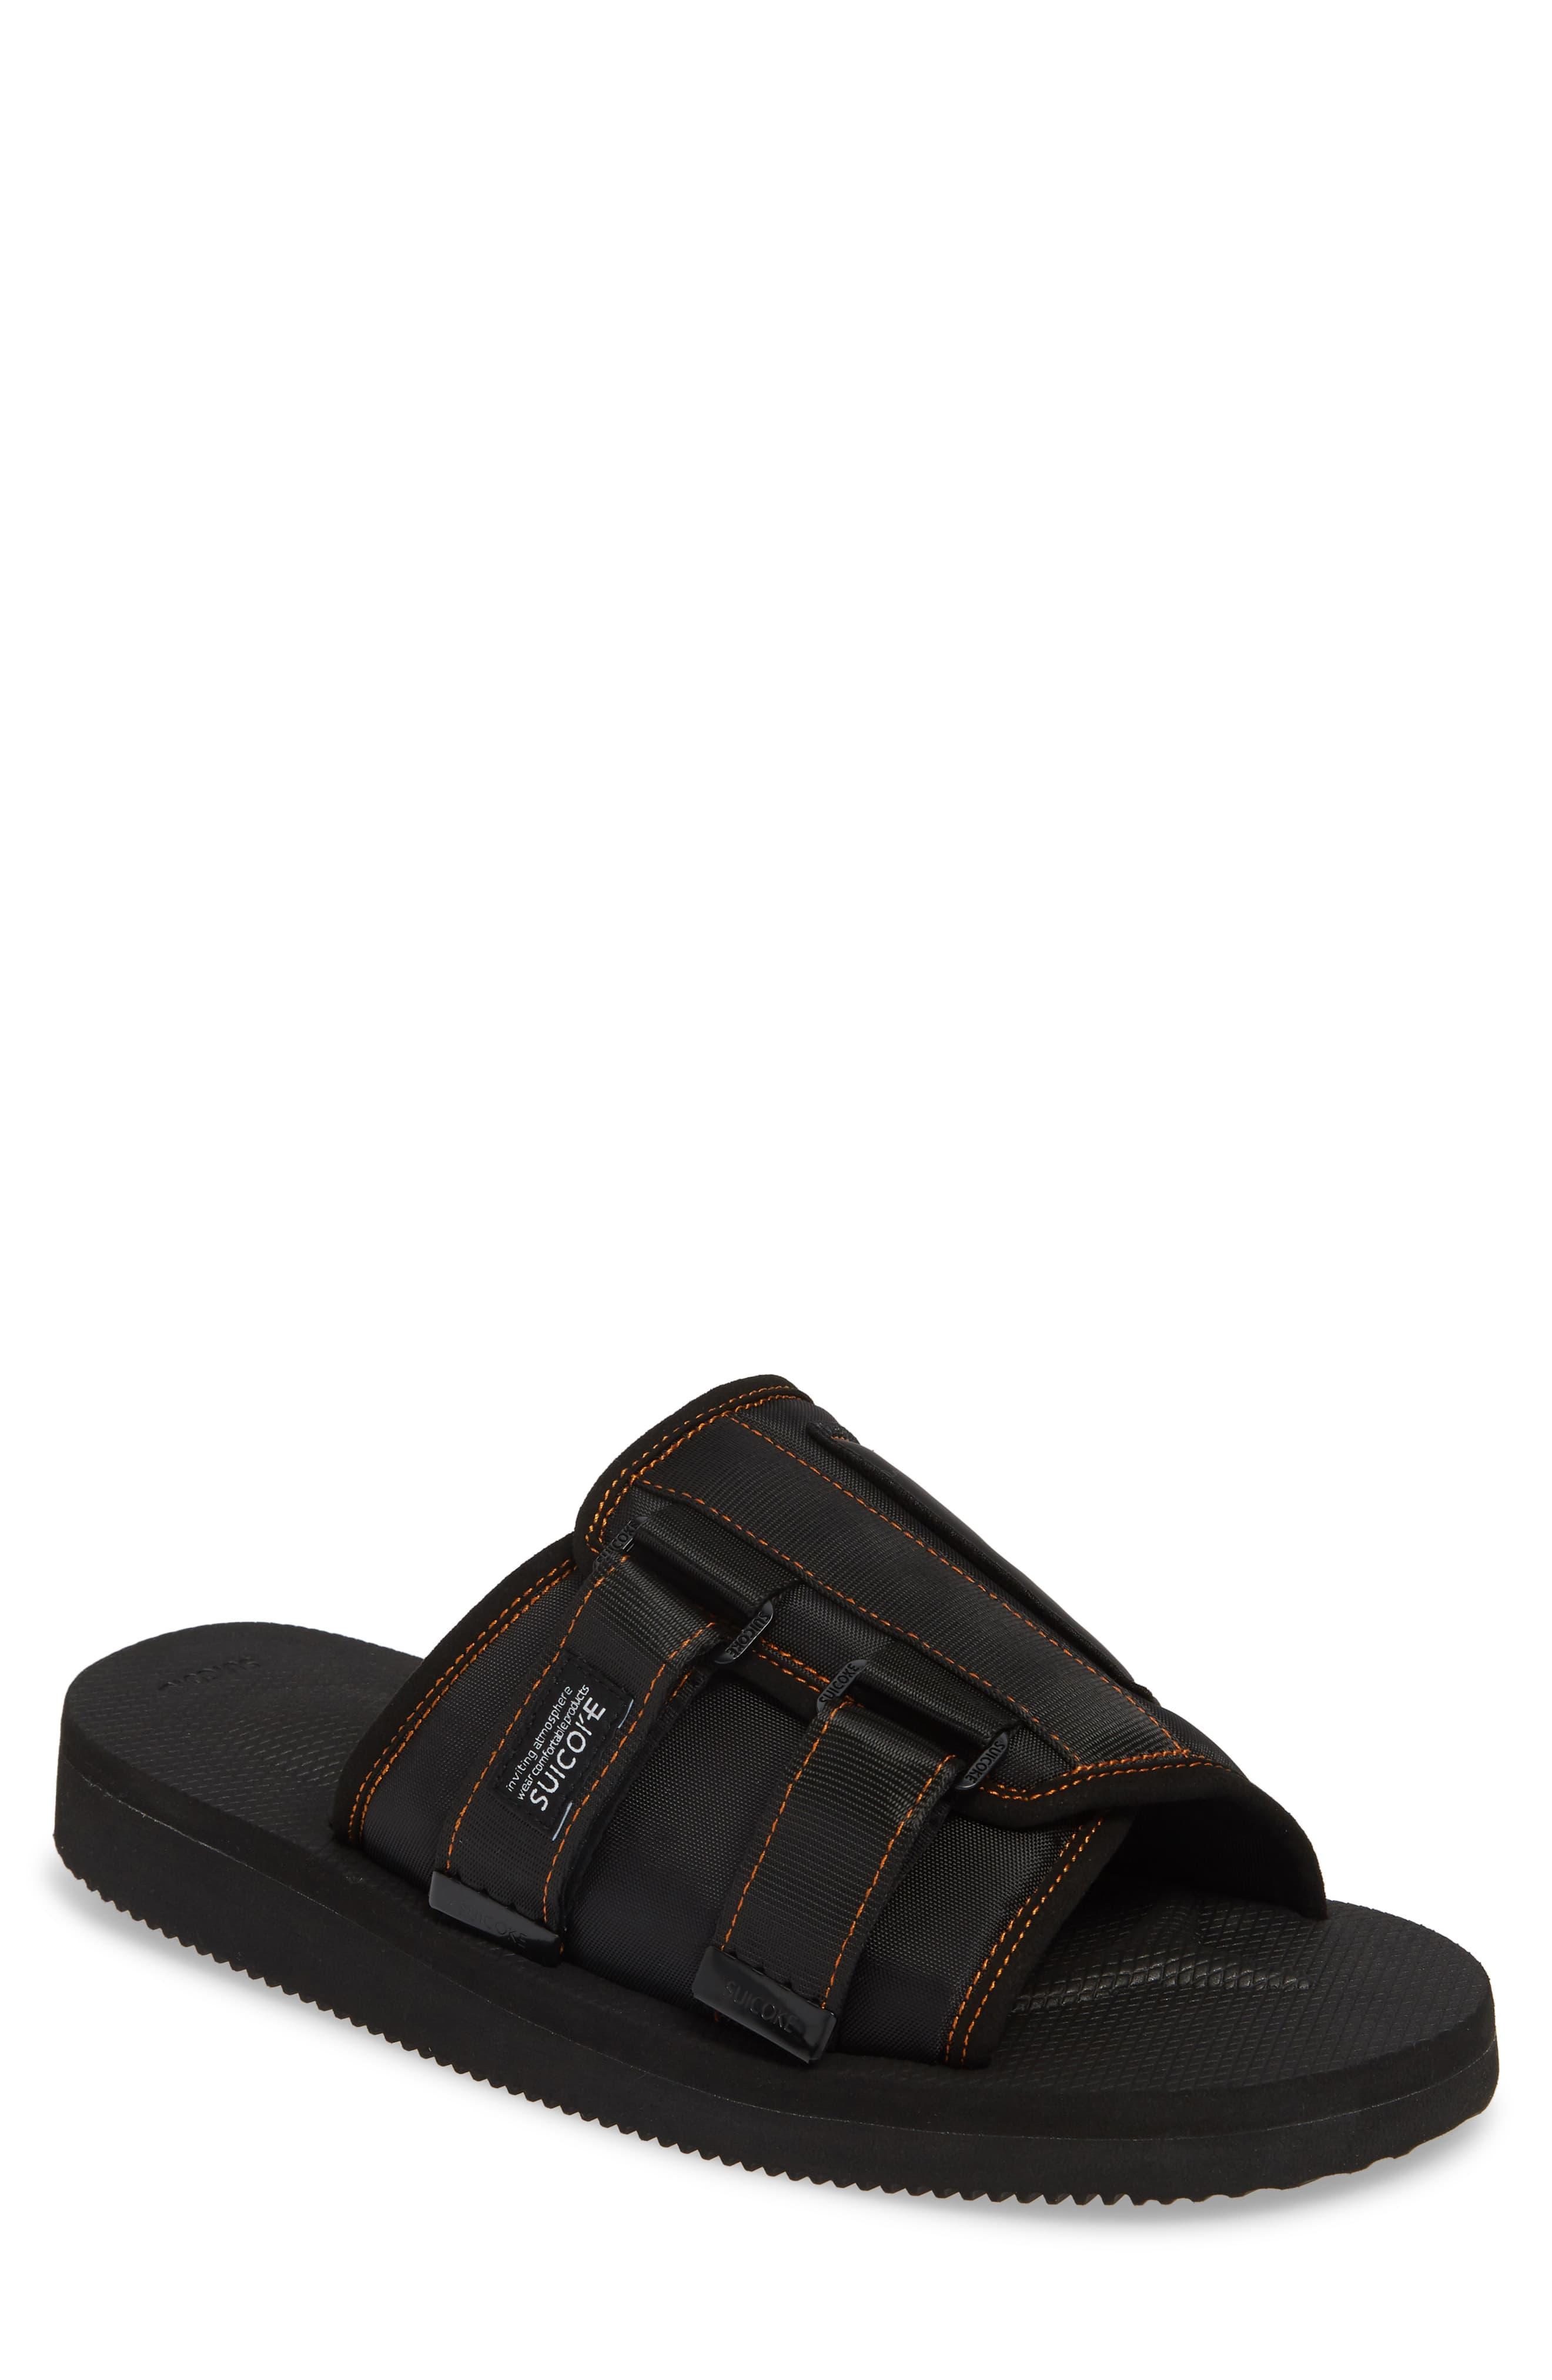 Palm Angels Suicoke Slide Sandal in Black for Men - Lyst